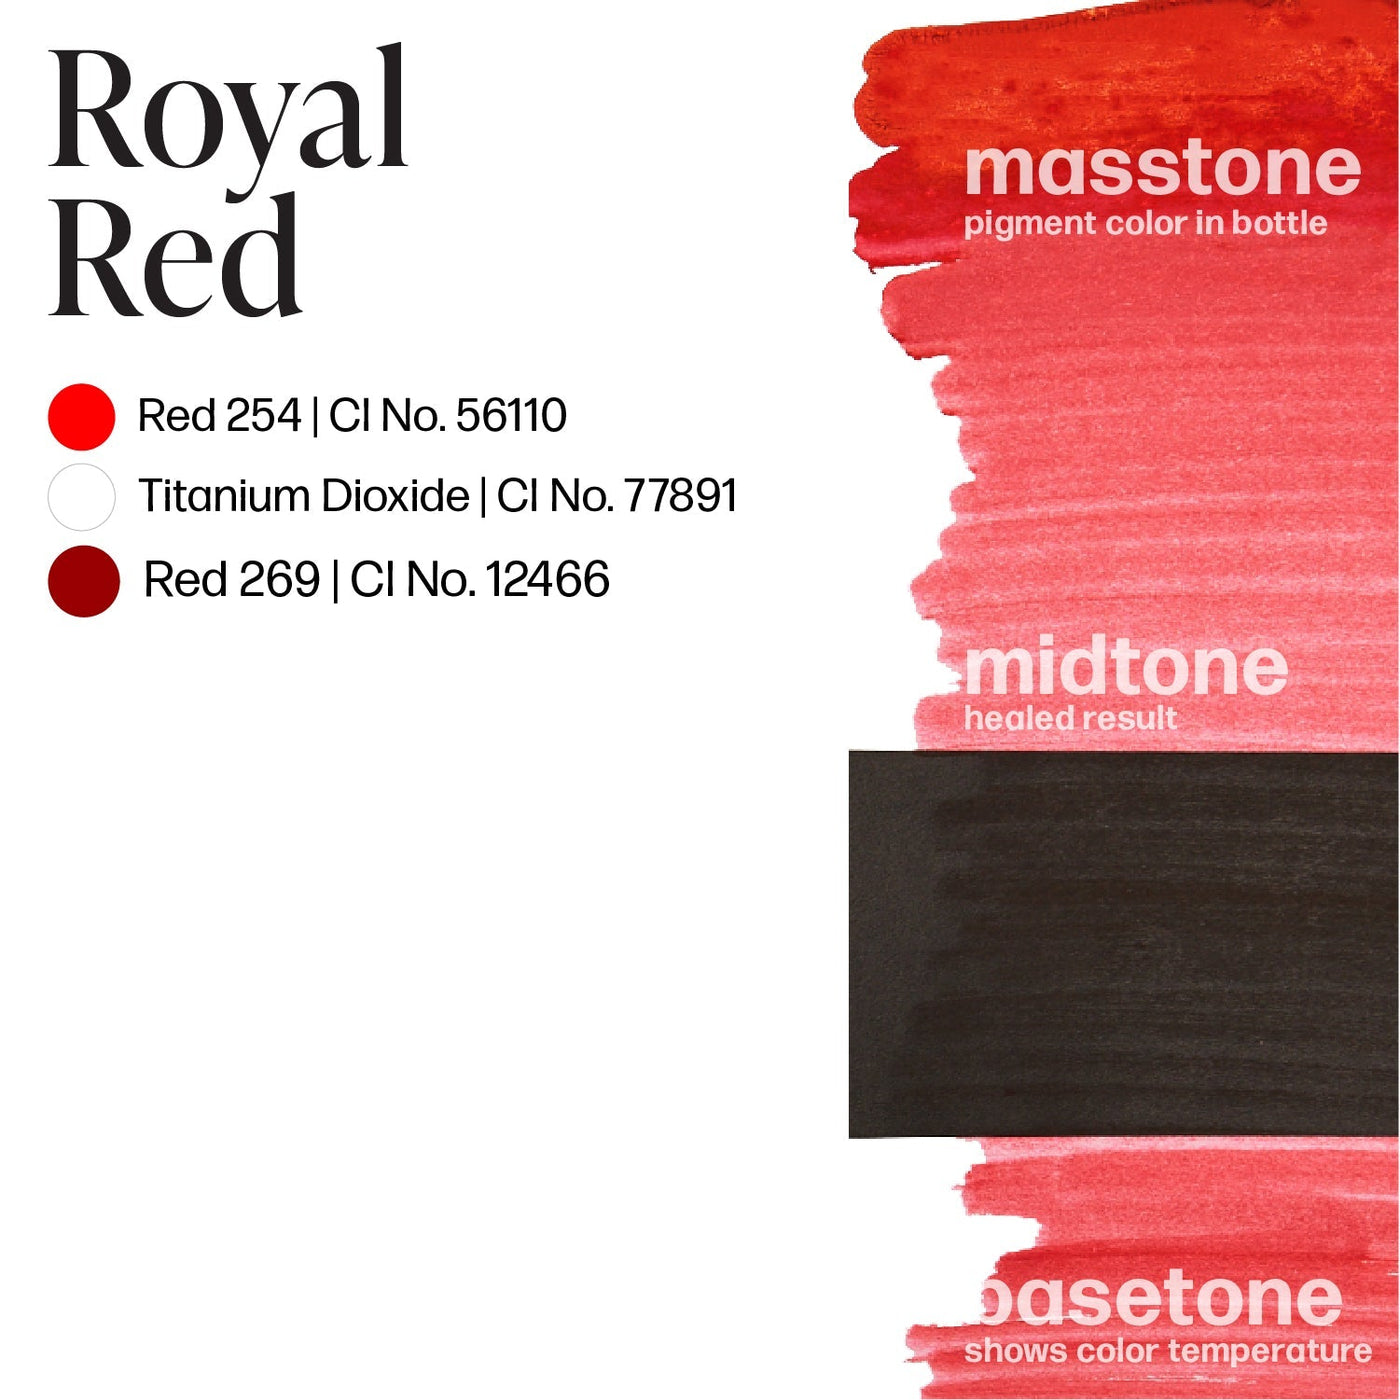 Perma Blend Royal Red - PMU Pigments - Mithra Tattoo Supplies Canada